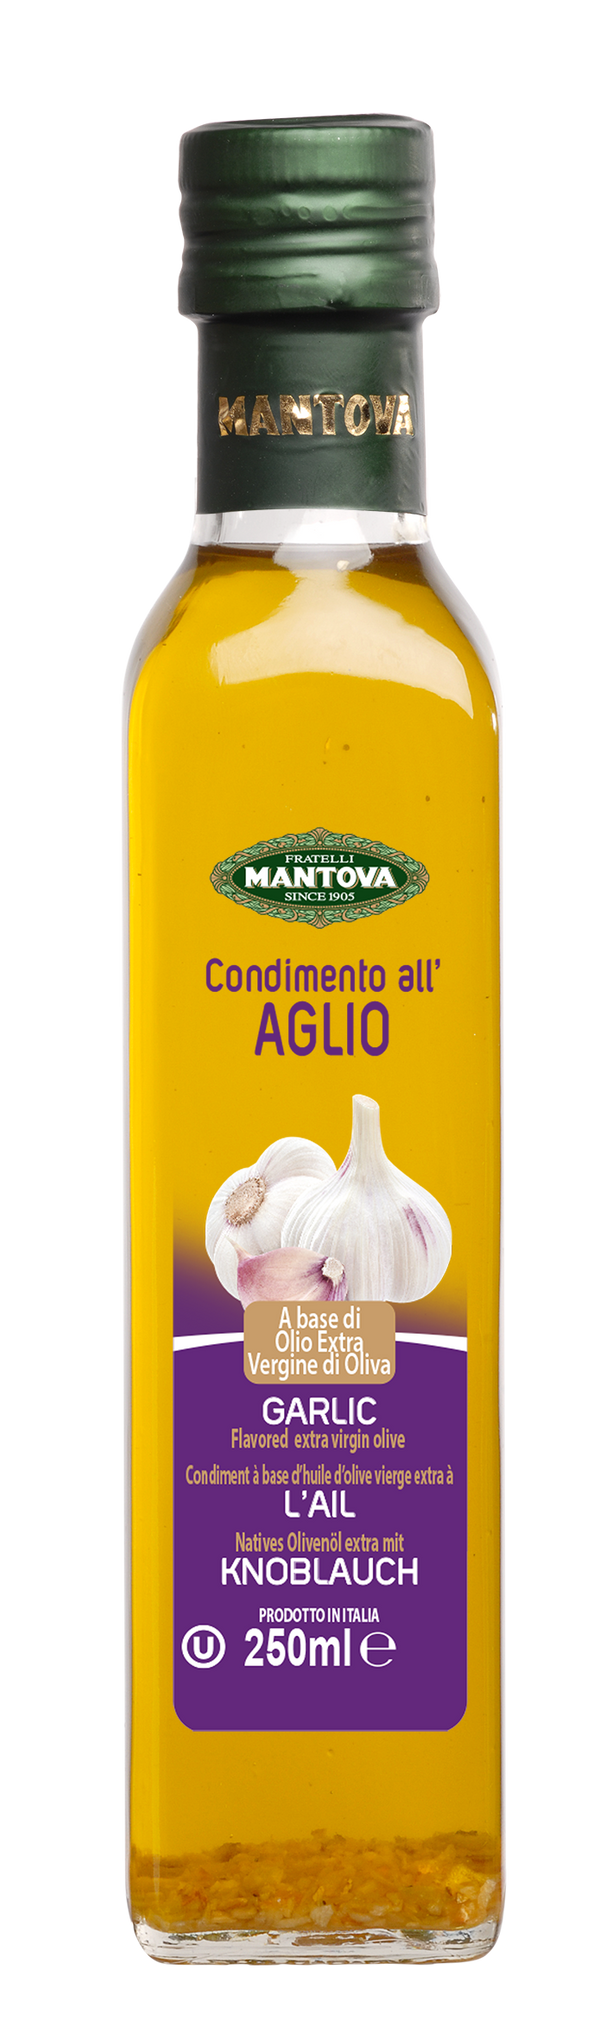 Garlic Flavored Extra Virgin Olive Oil Mantova 250ml